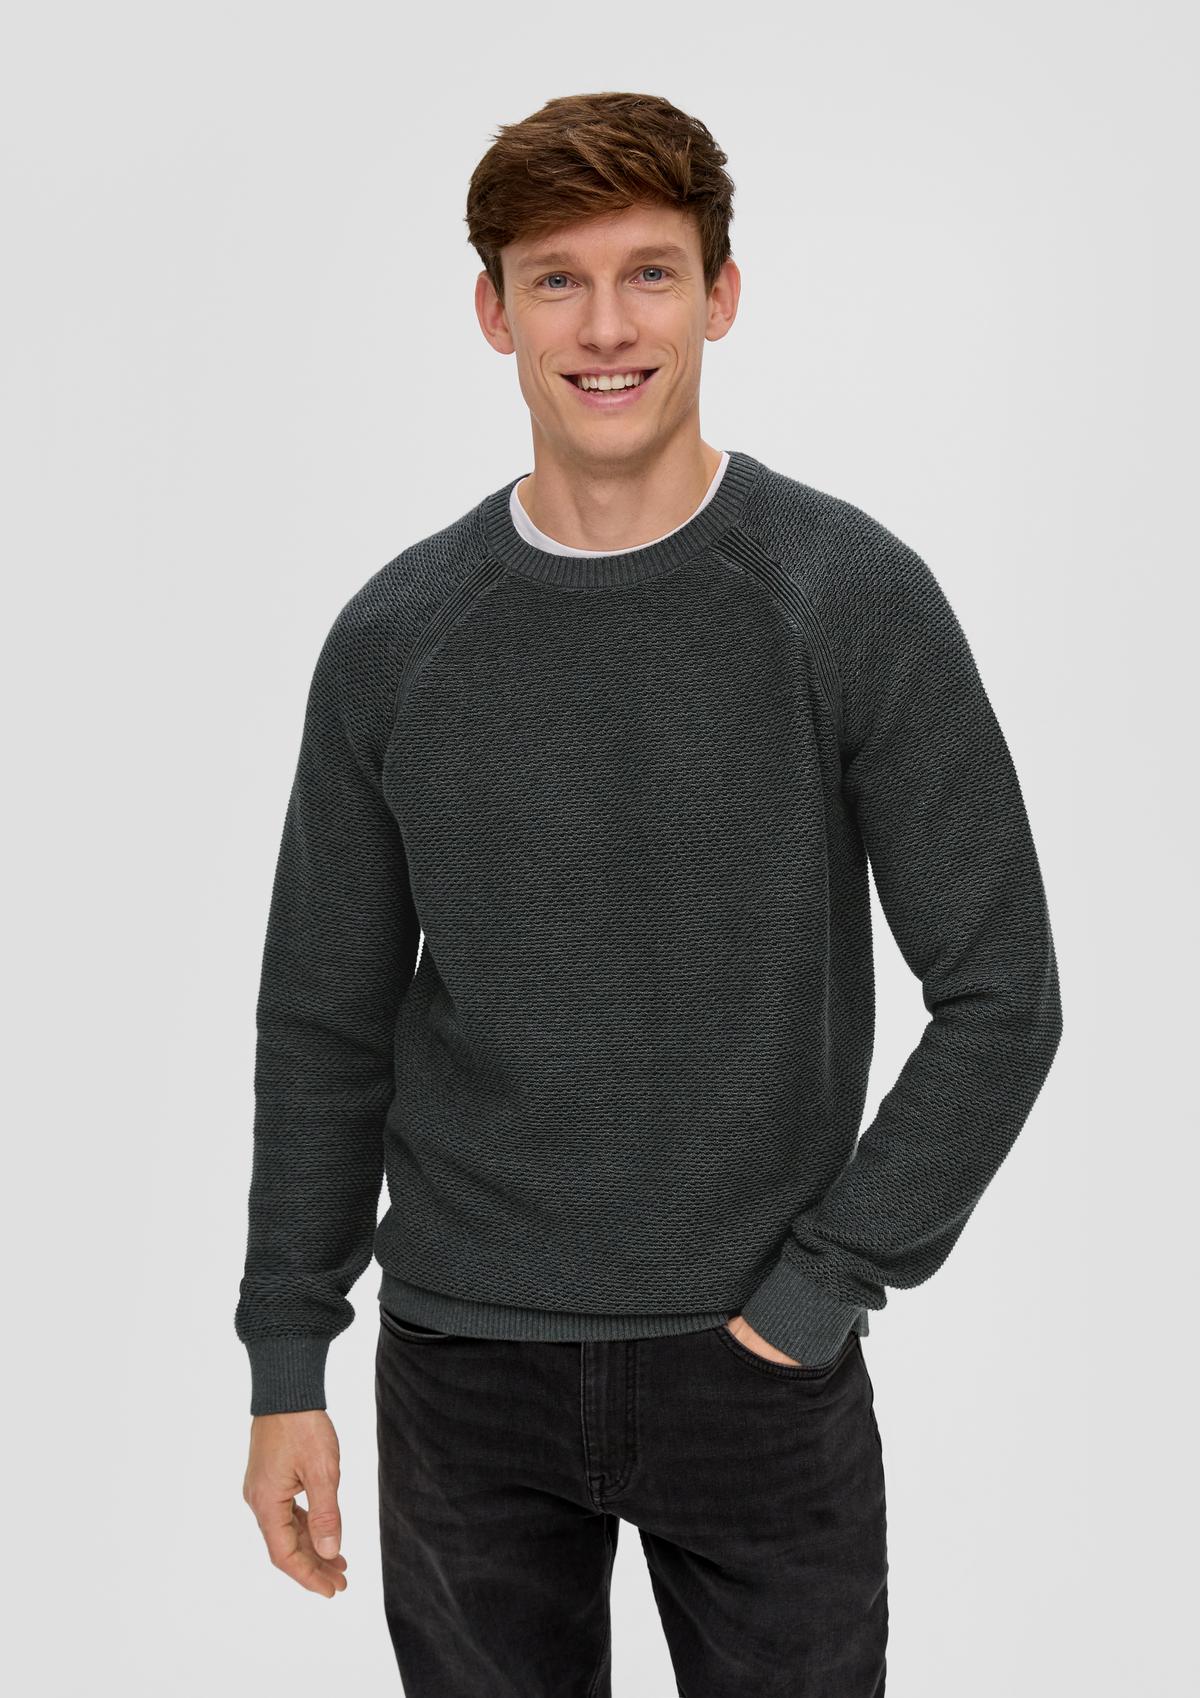 Knitted pullover - grey dark